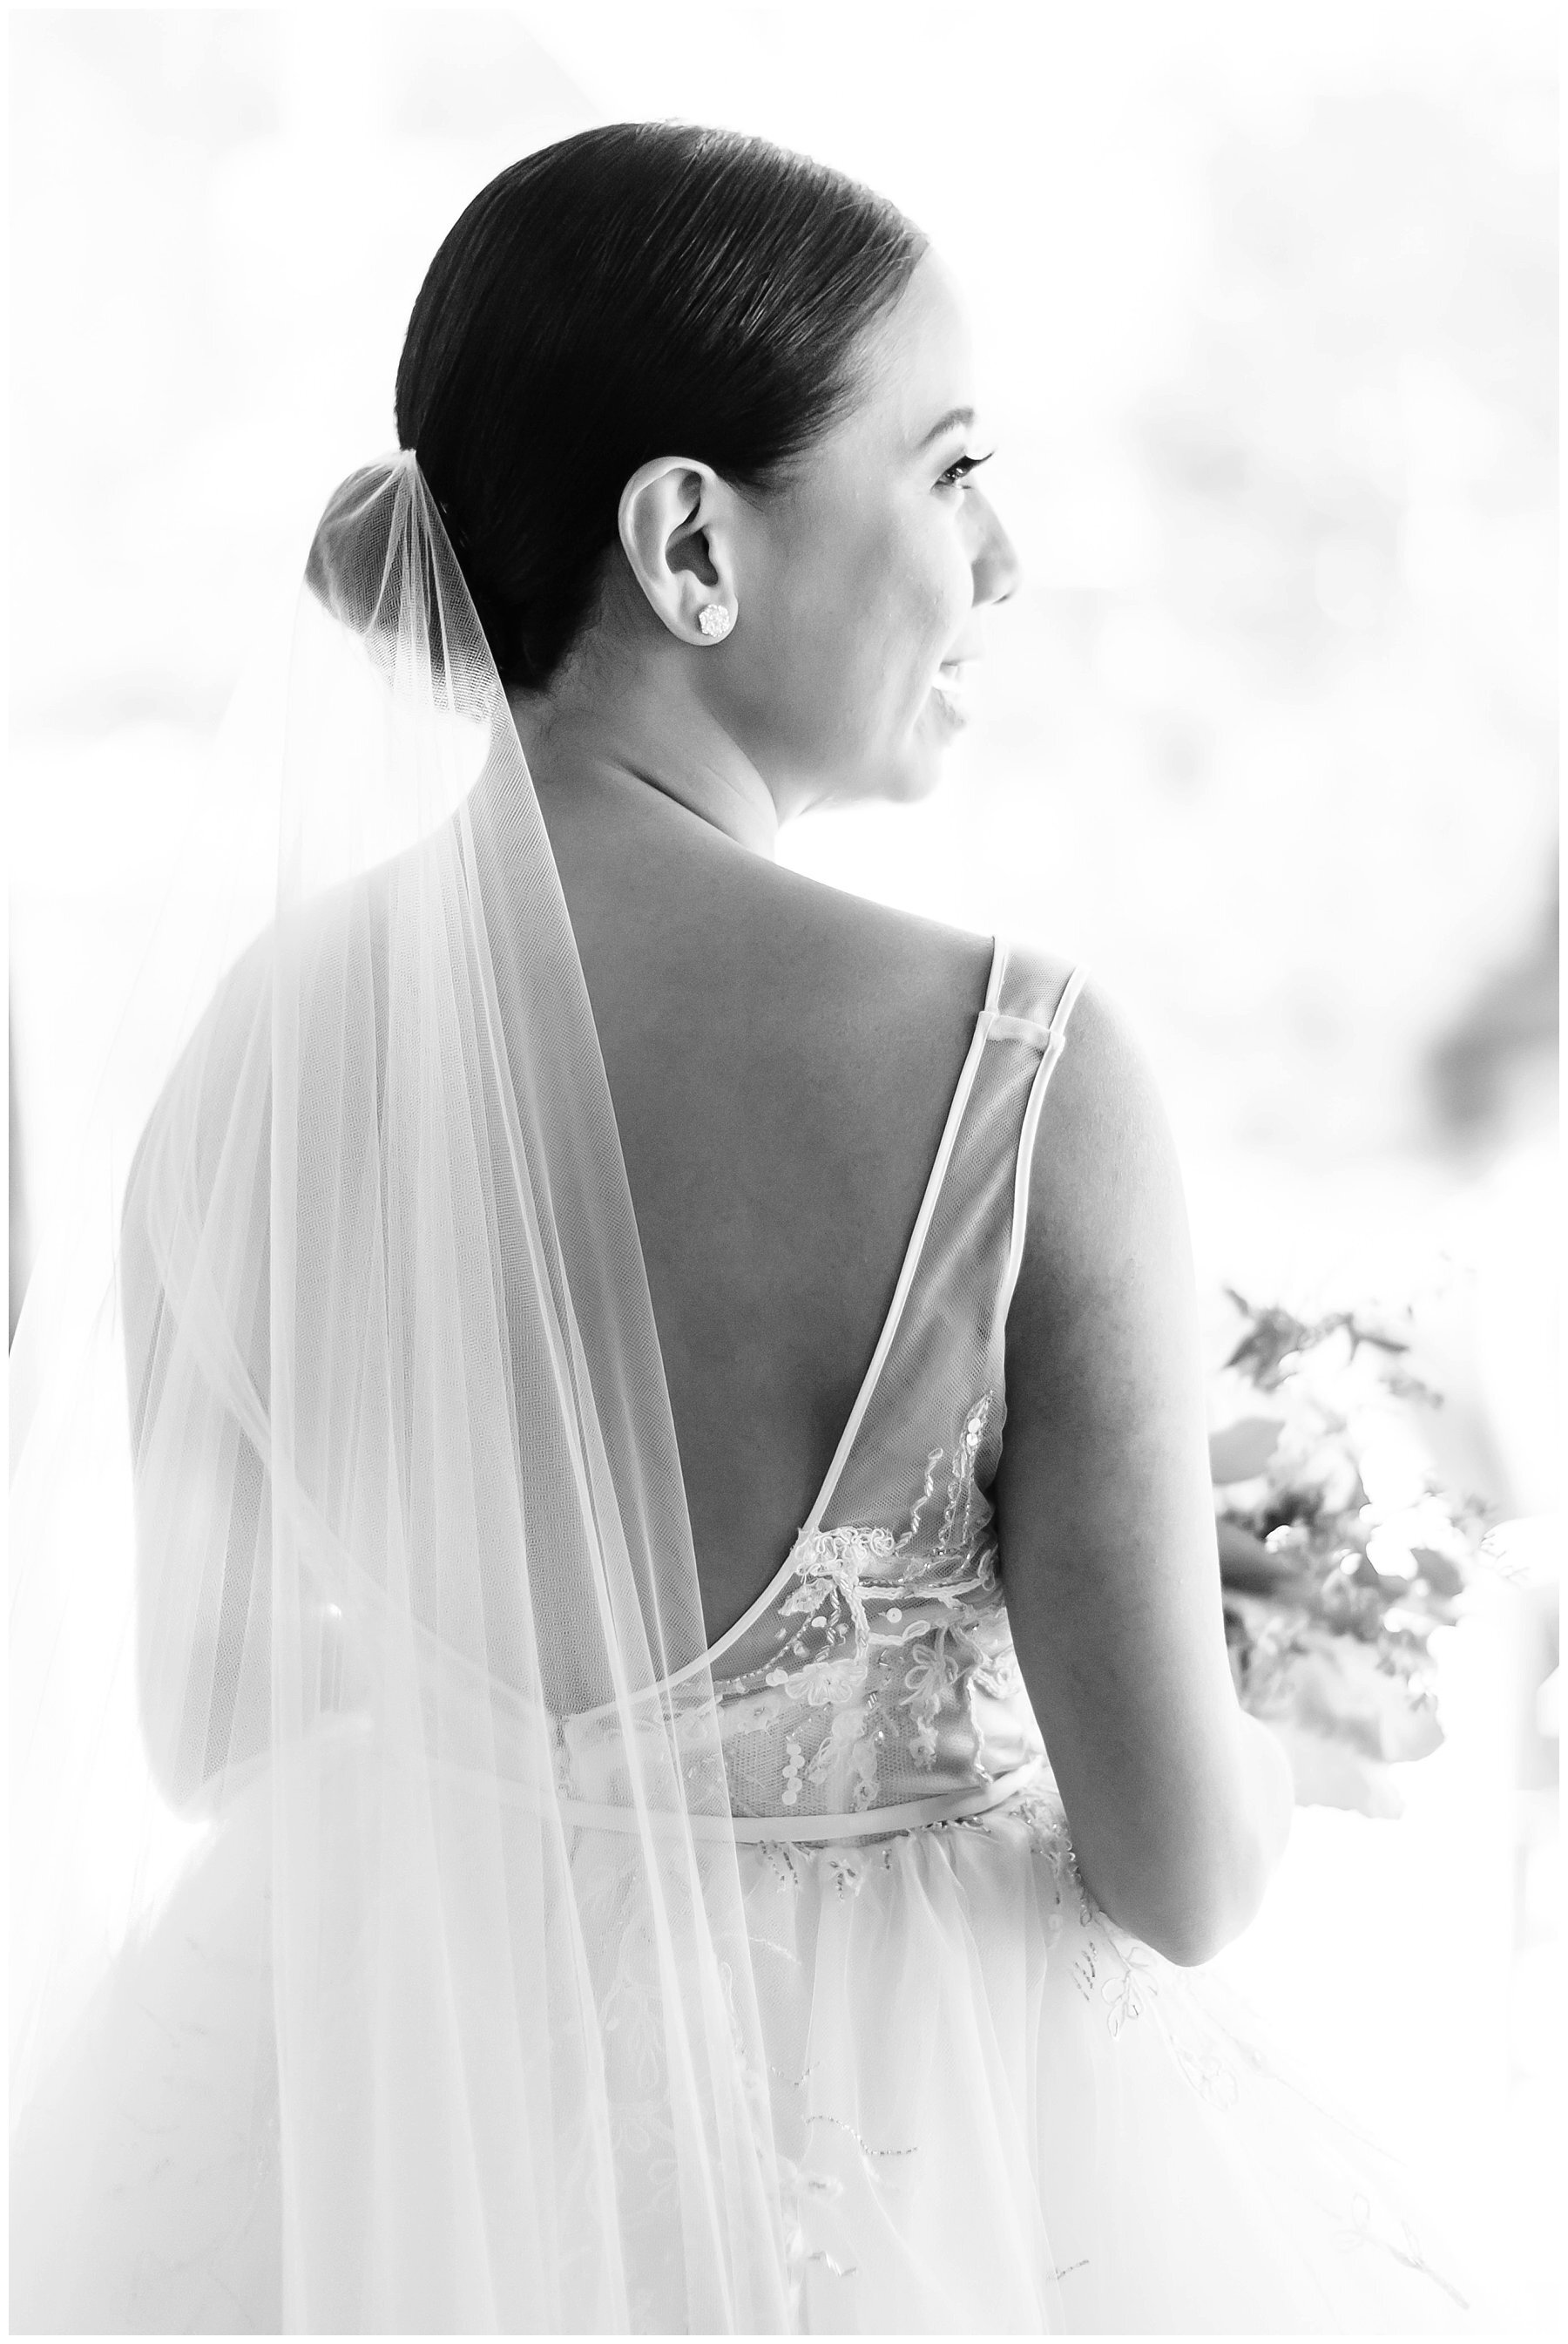  bride standing in the window light in her gown 